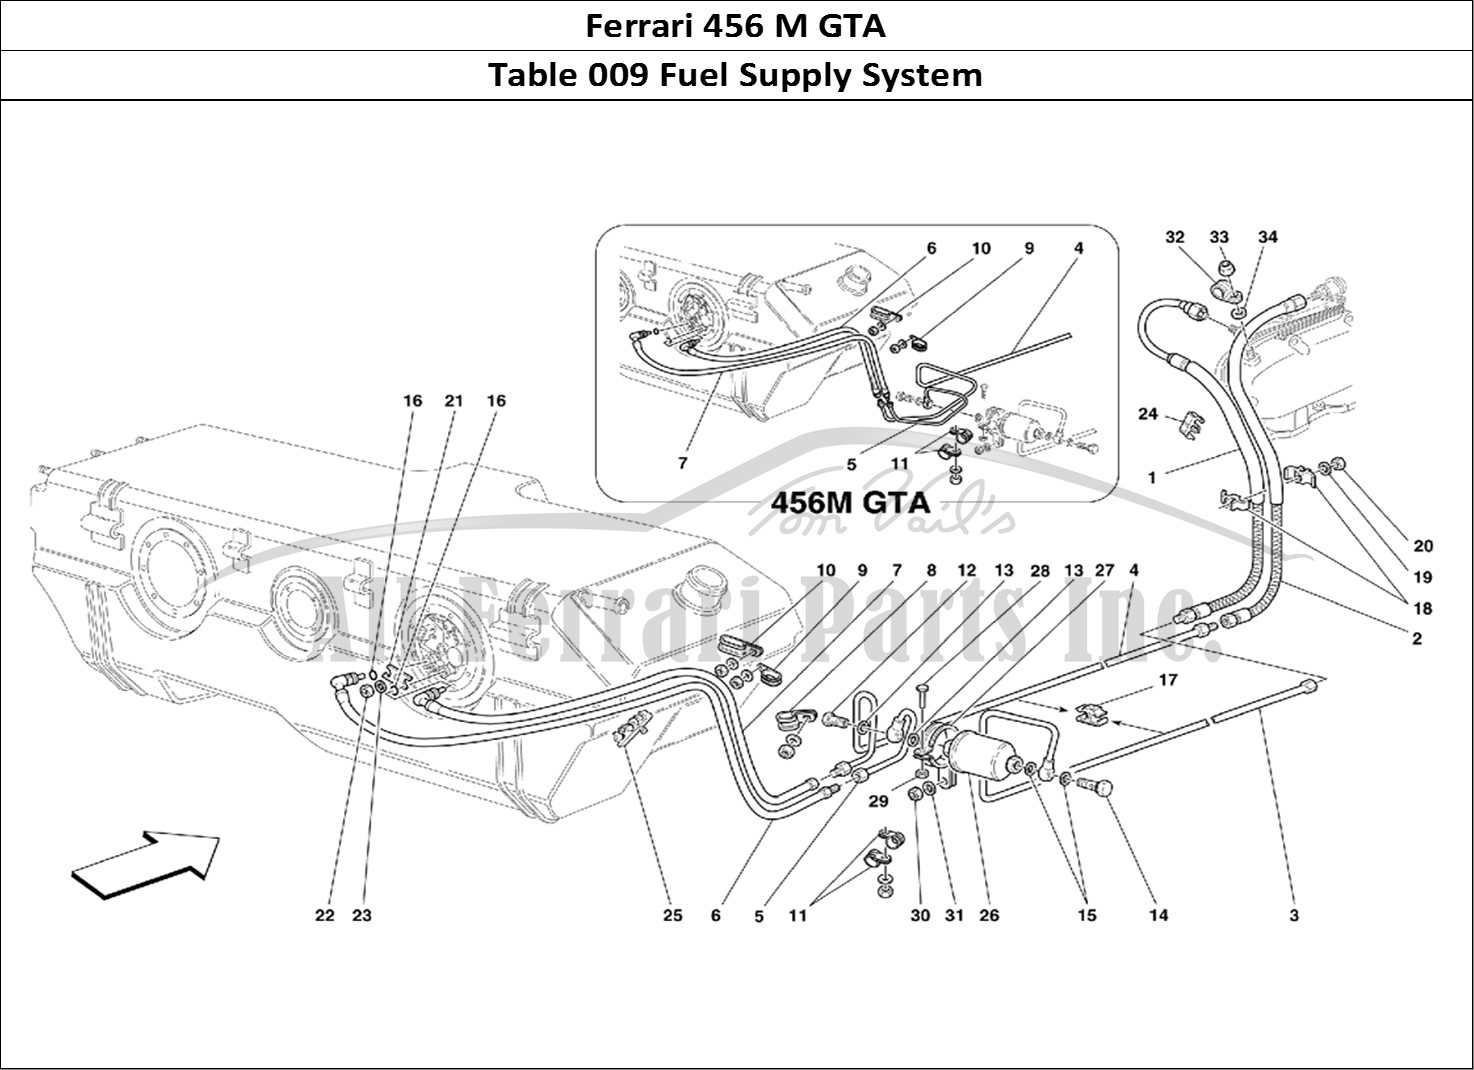 Ferrari Parts Ferrari 456 M GT Page 009 Fuel Supply System